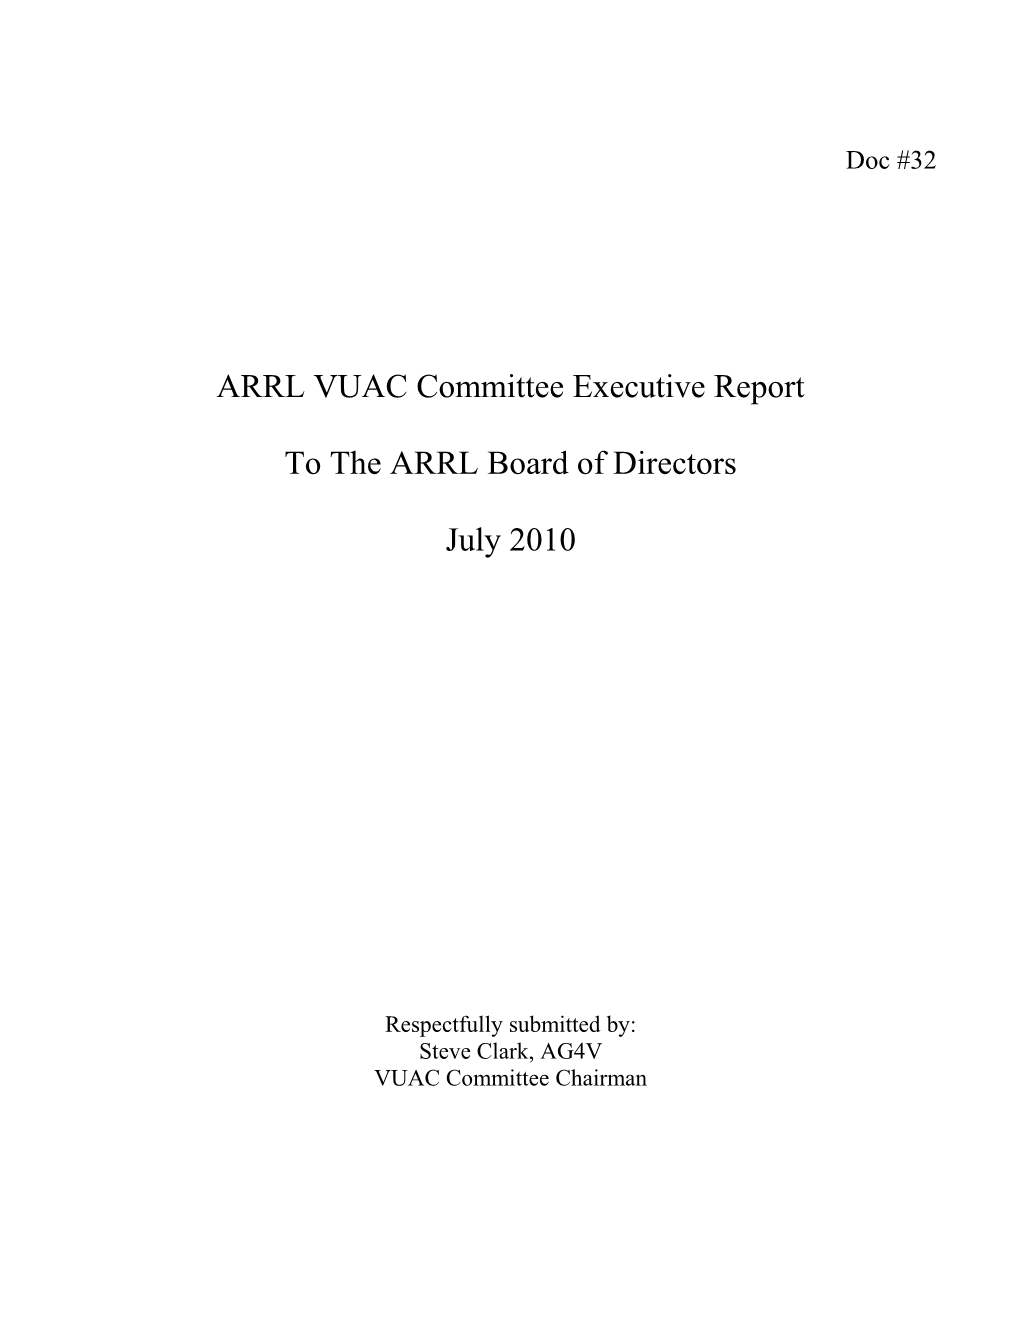 ARRL VUAC Committee Executive Report